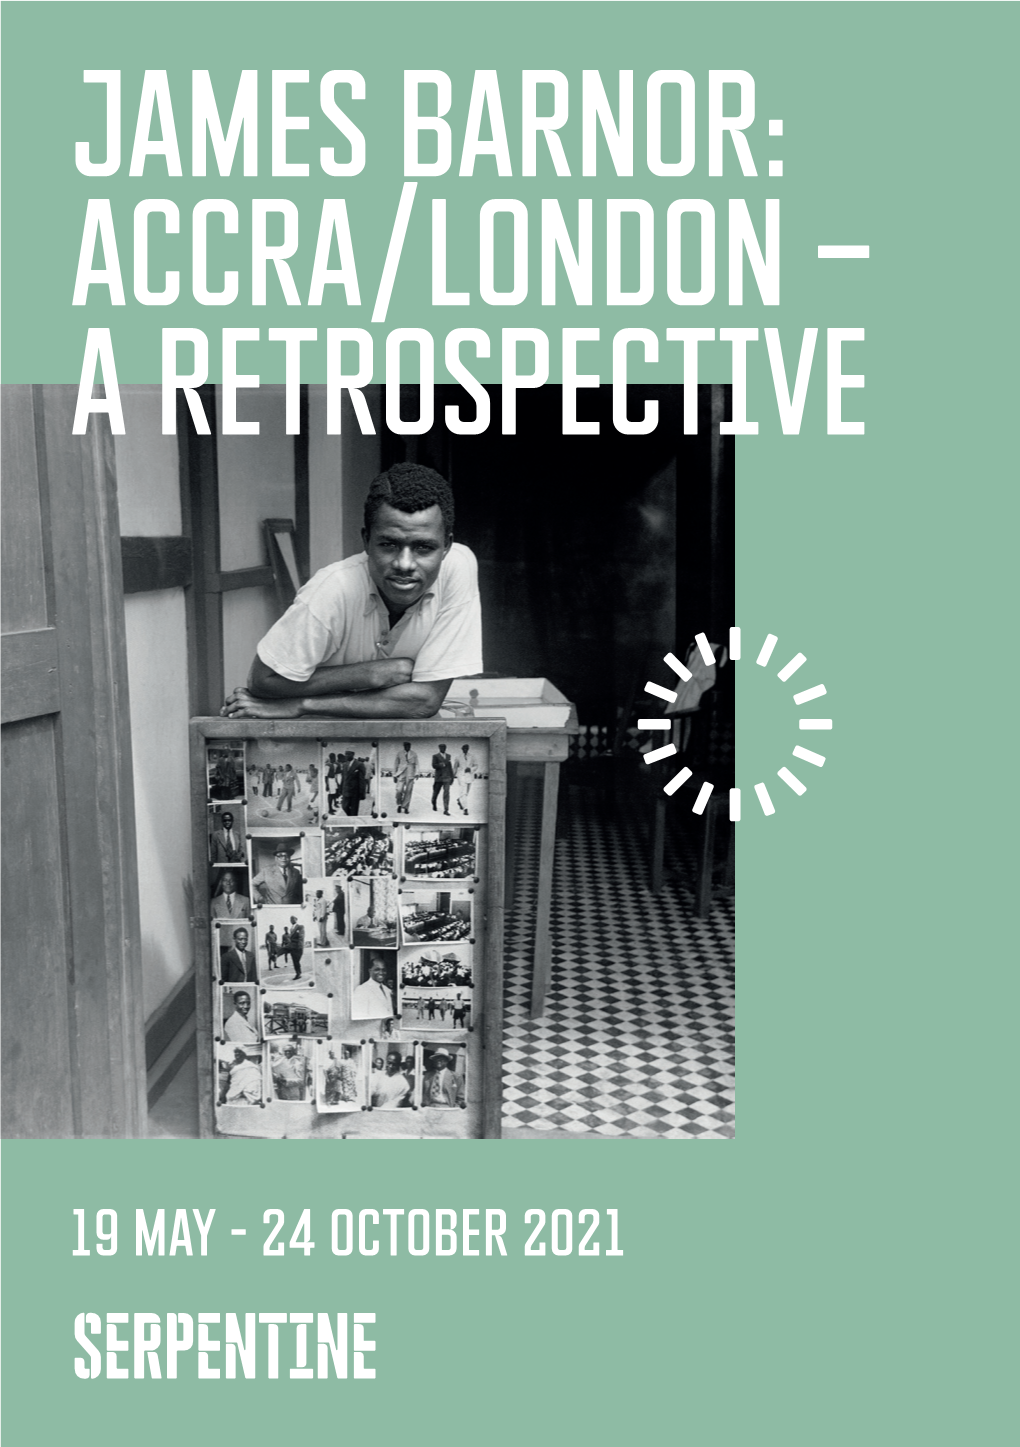 James Barnor: Accra/London – a Retrospective